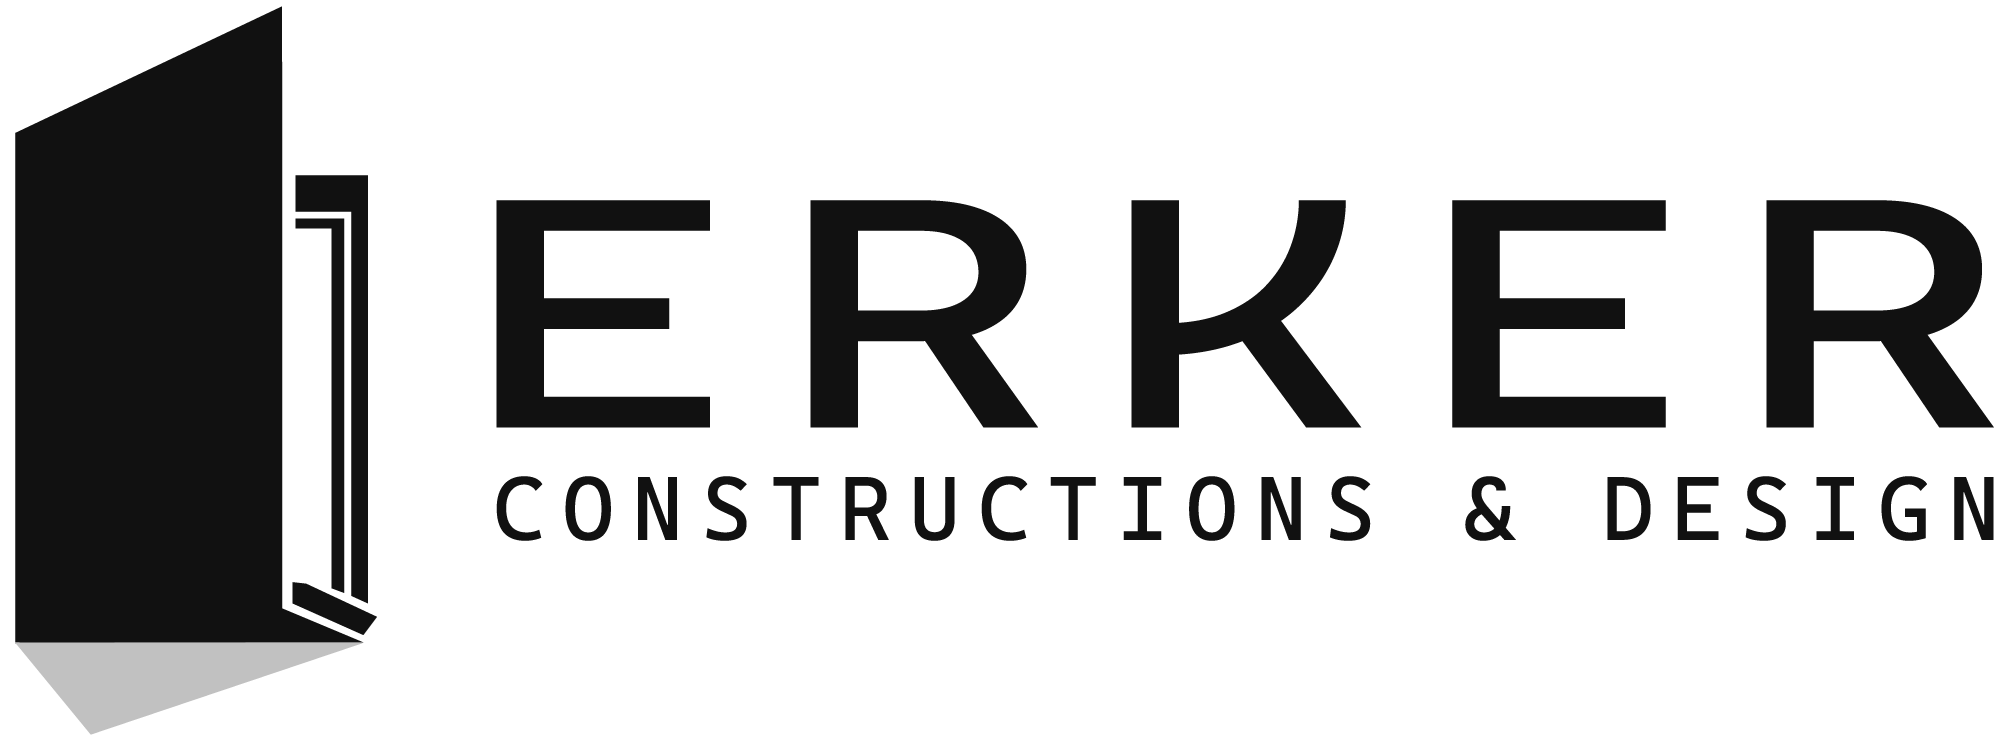 Erker – Constructions & Design